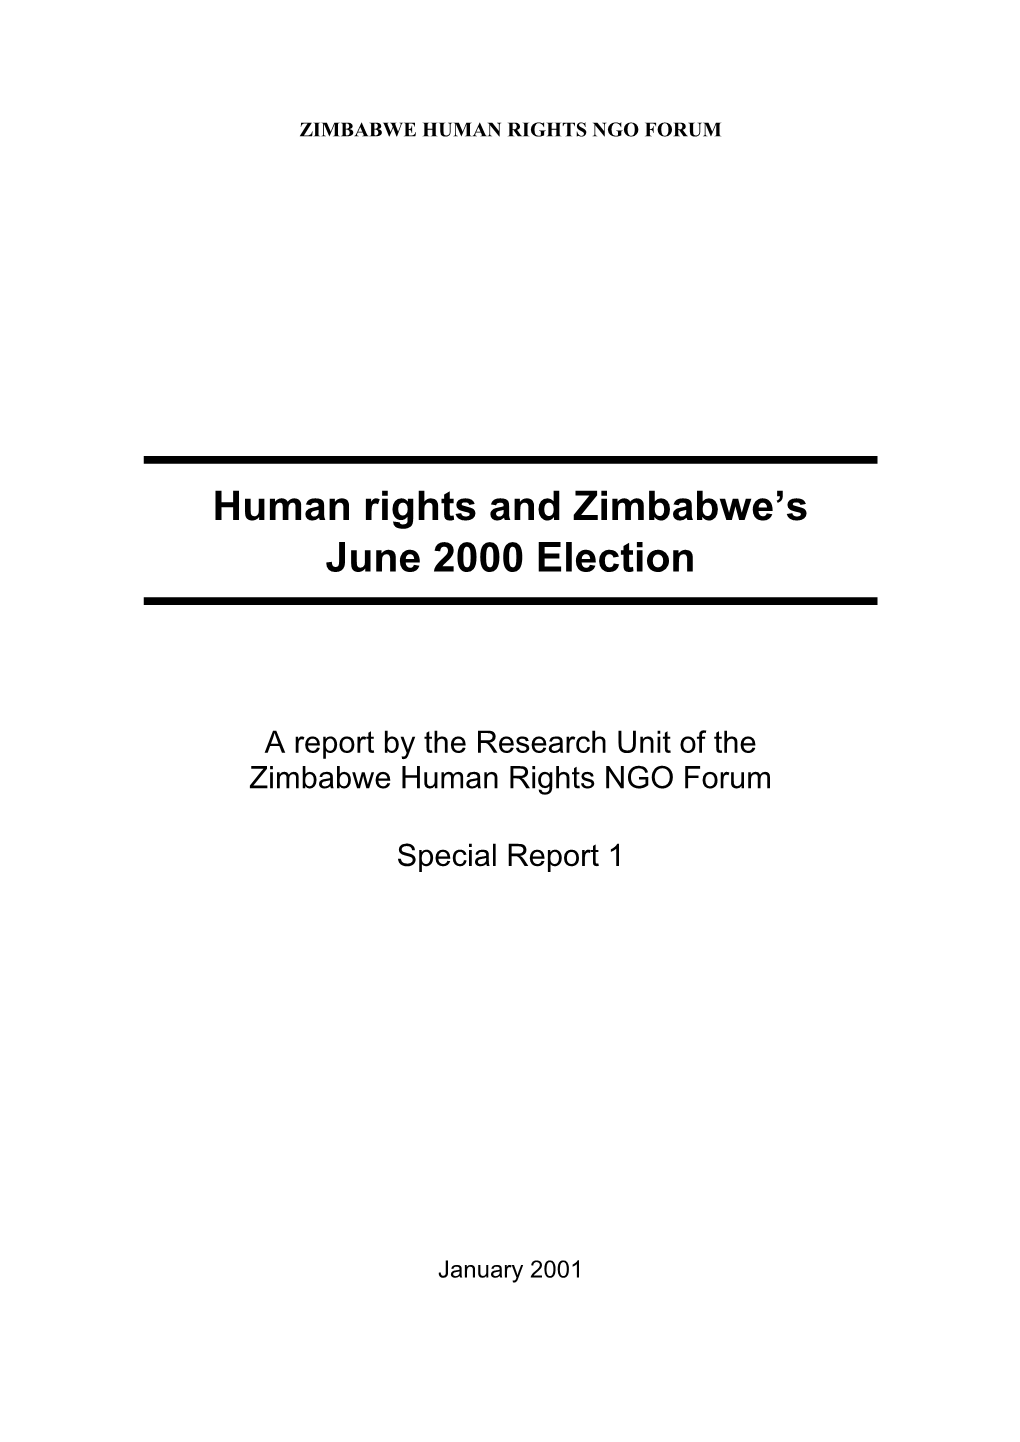 Human Rights and Zimbabwe's 2000 Election